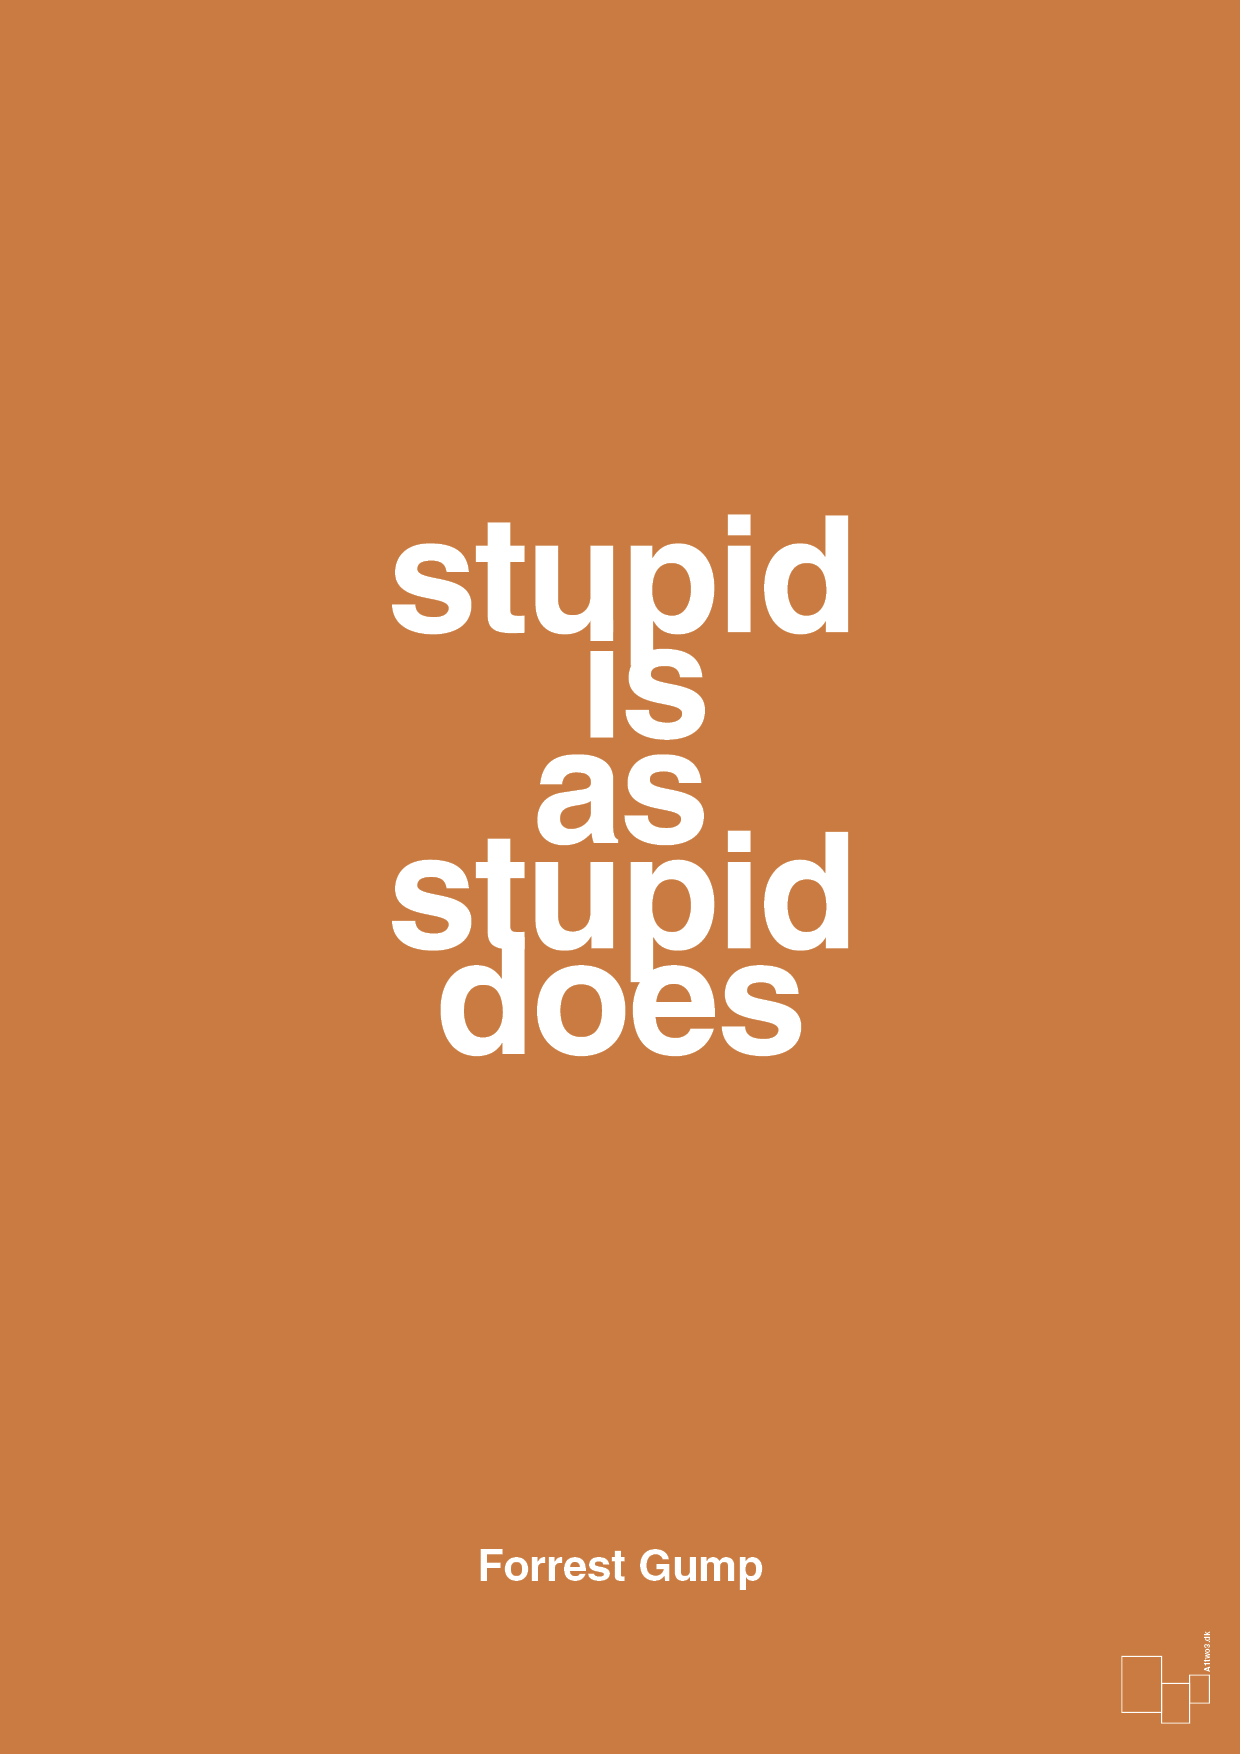 stupid is as stupid does - Plakat med Citater i Rumba Orange